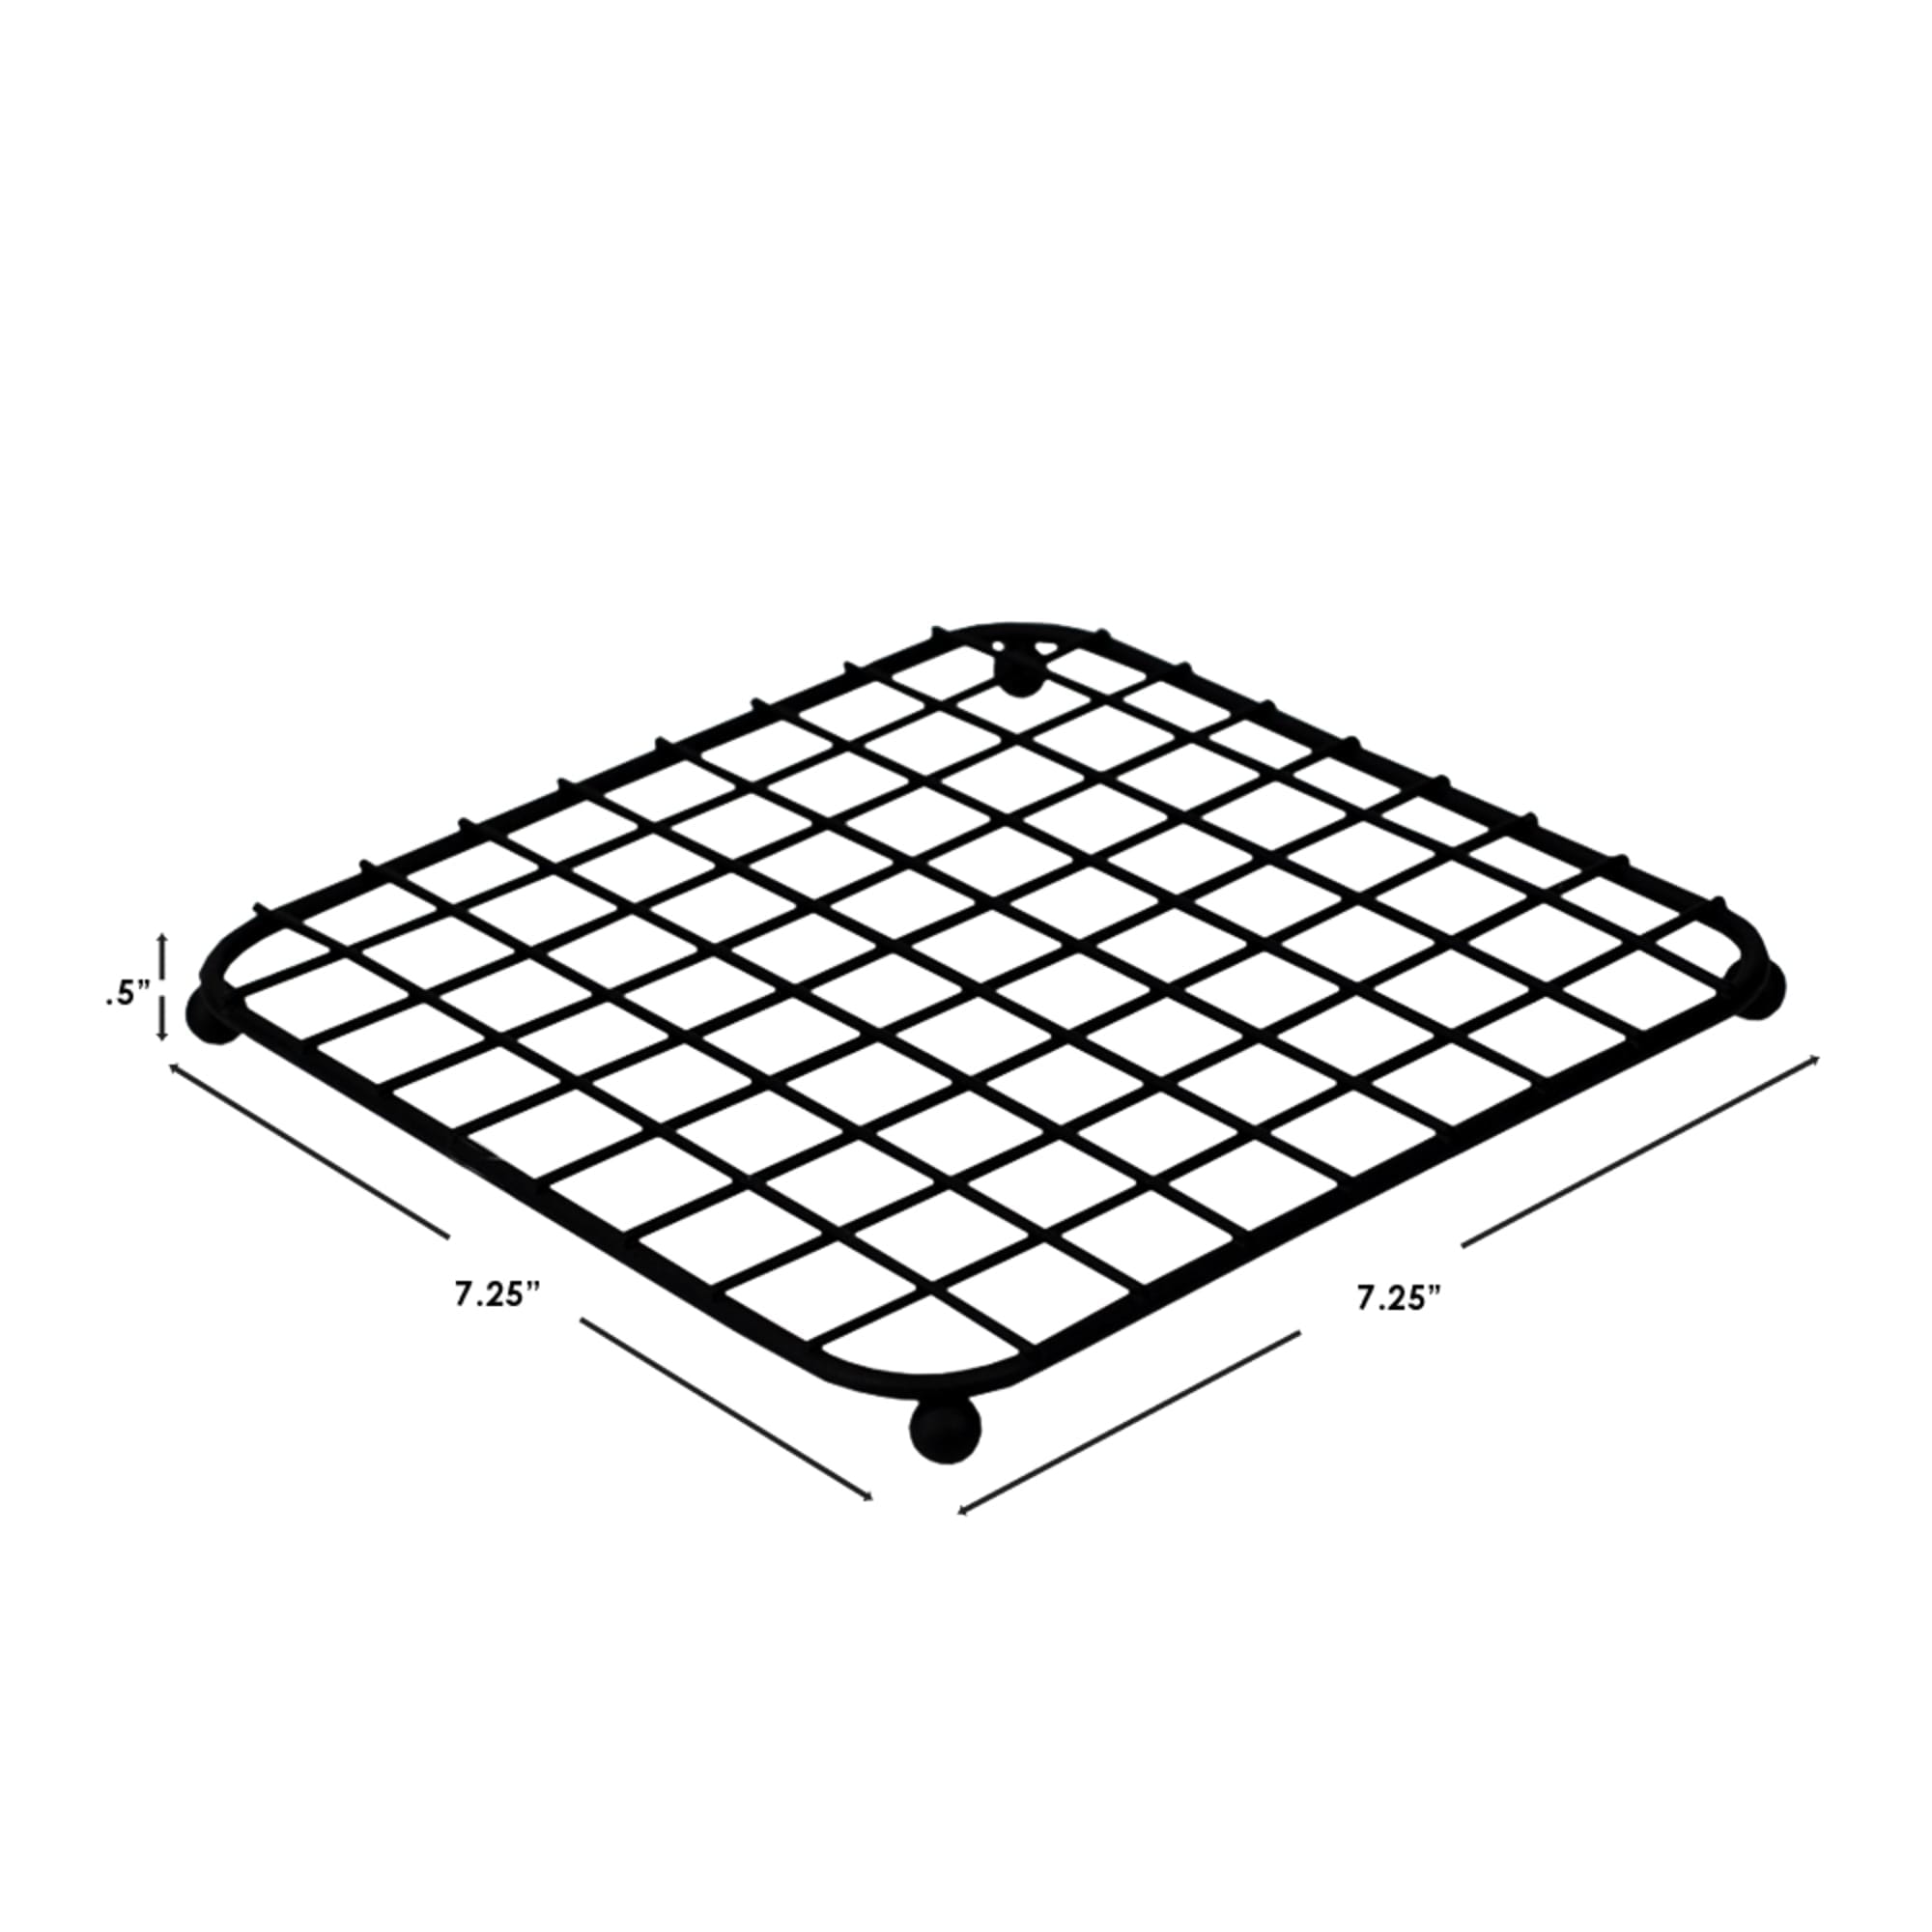 Home Basics Grid Collection Non-Skid Square Trivet, Black $2.50 EACH, CASE PACK OF 12